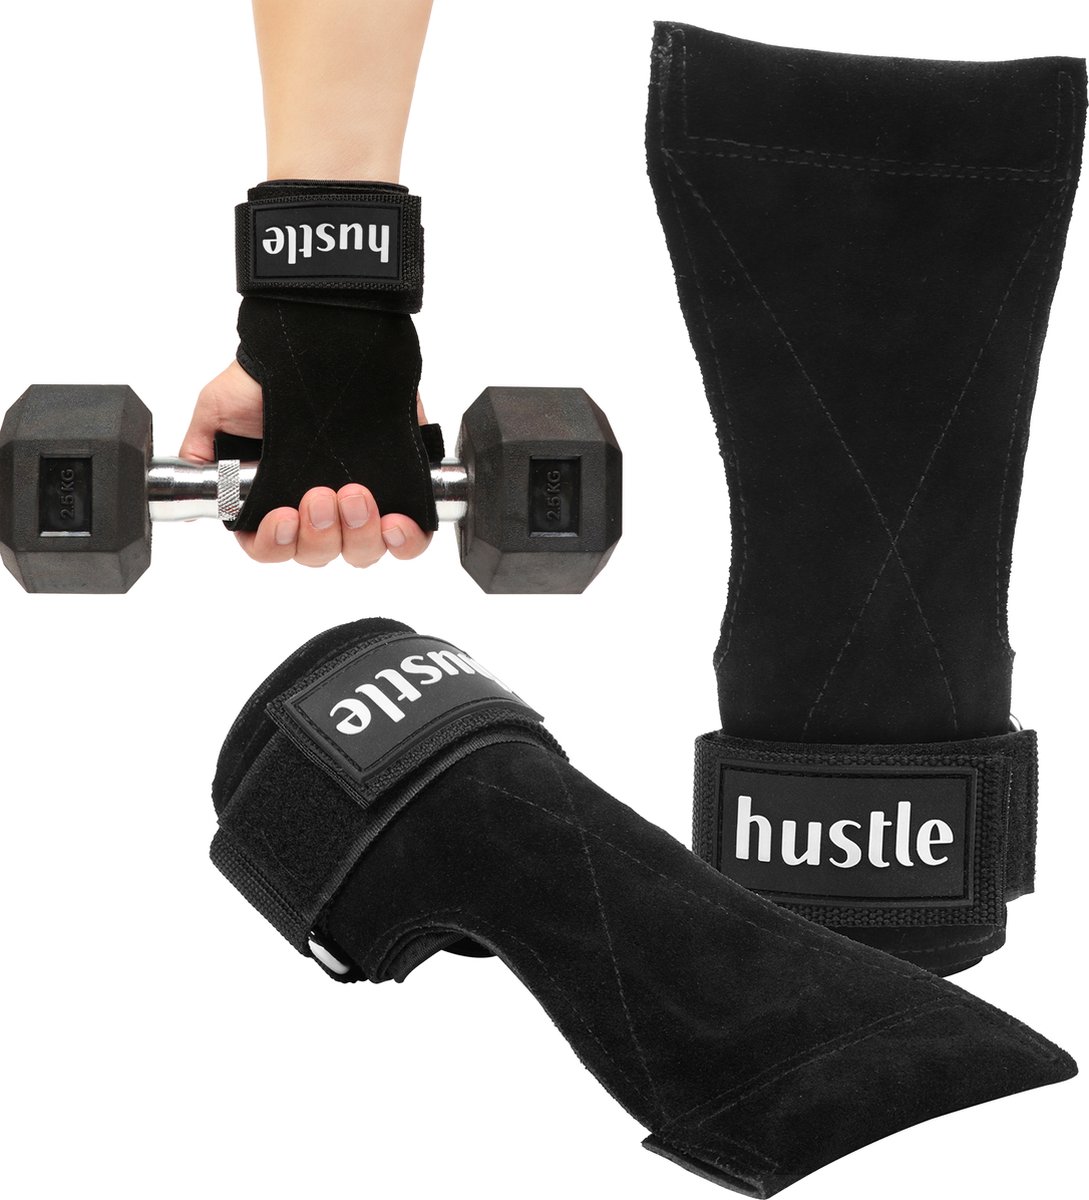 hustle Lifting Grips - Lifting straps - Lifting Hooks - Voor Fitness, Powerlift en Crossfit - Leer/Leather - Zwart